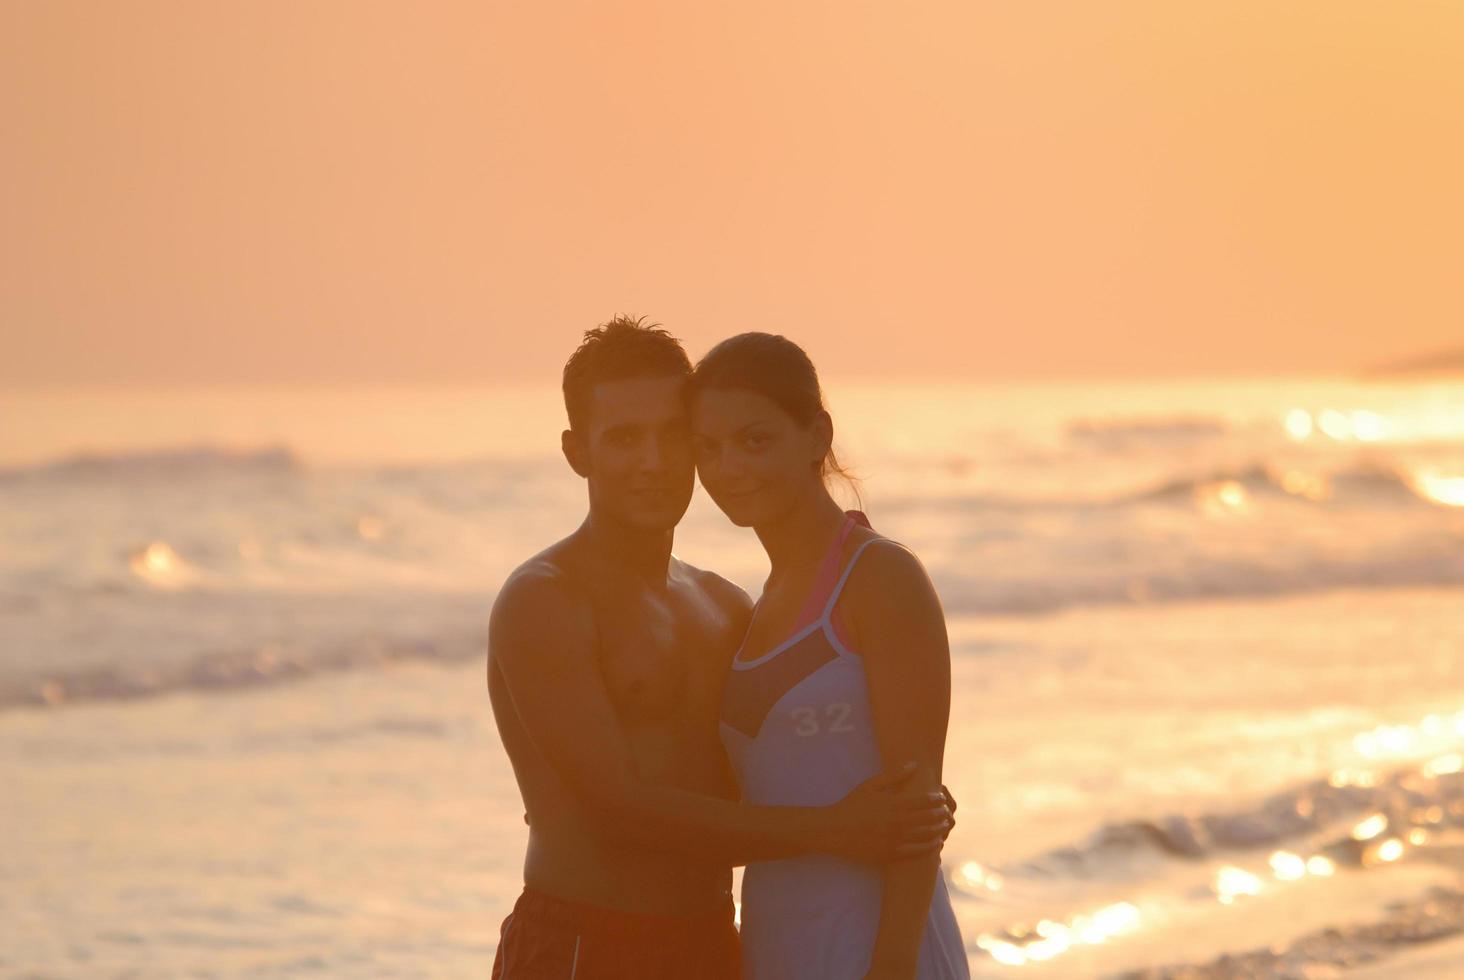 romantic couple on beach photo